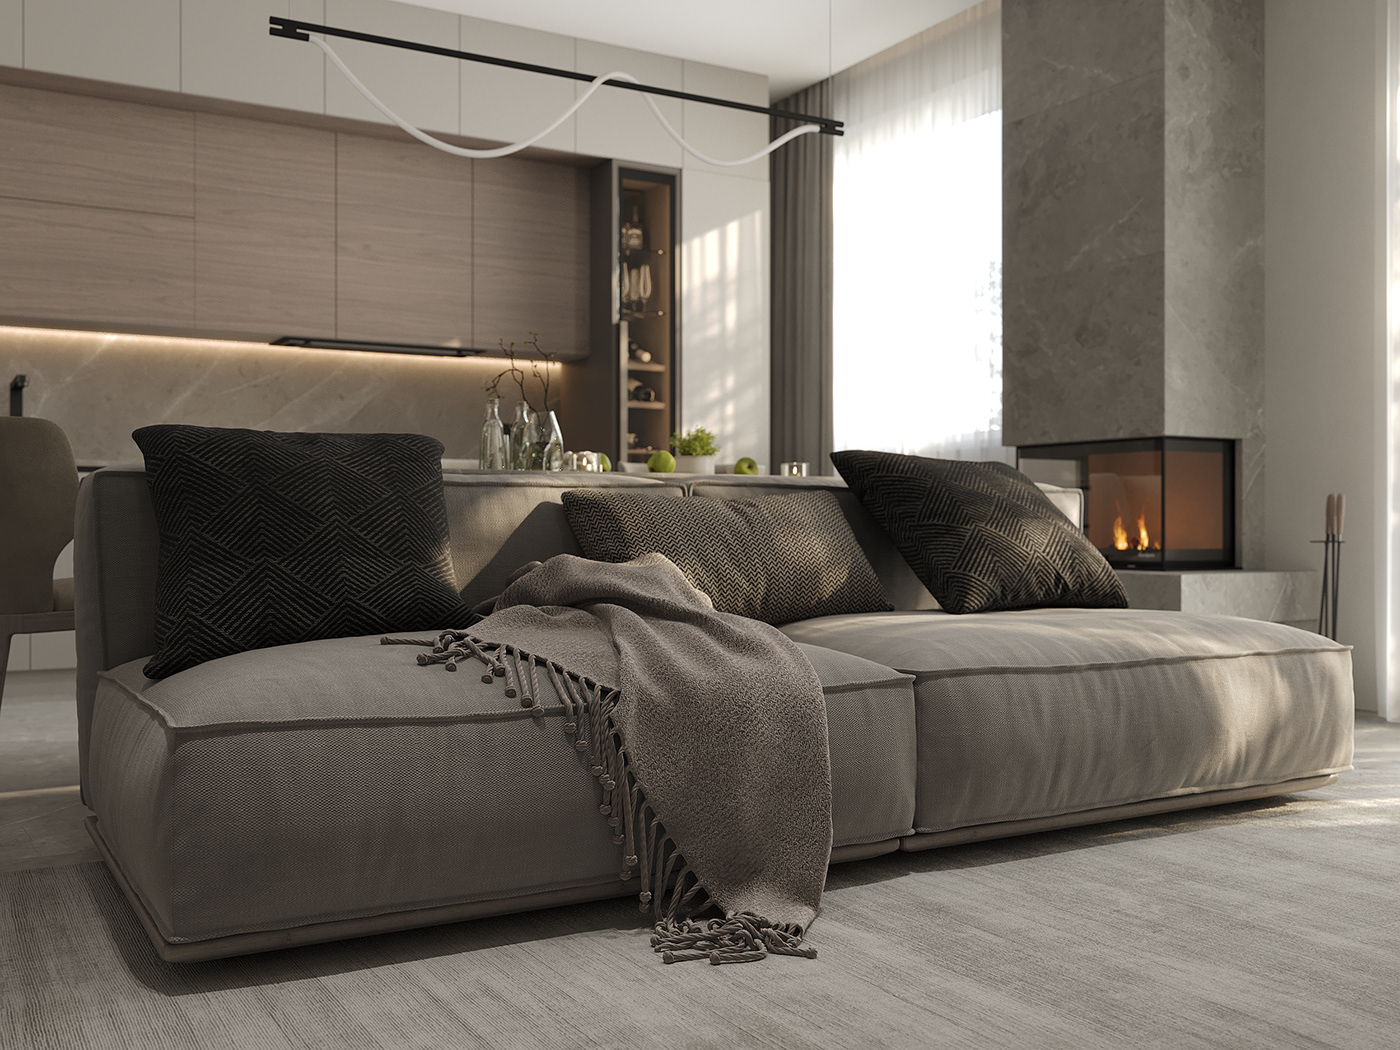 designinterior studio kitchen fireplace interior design  visualization small house design modern TVWALL